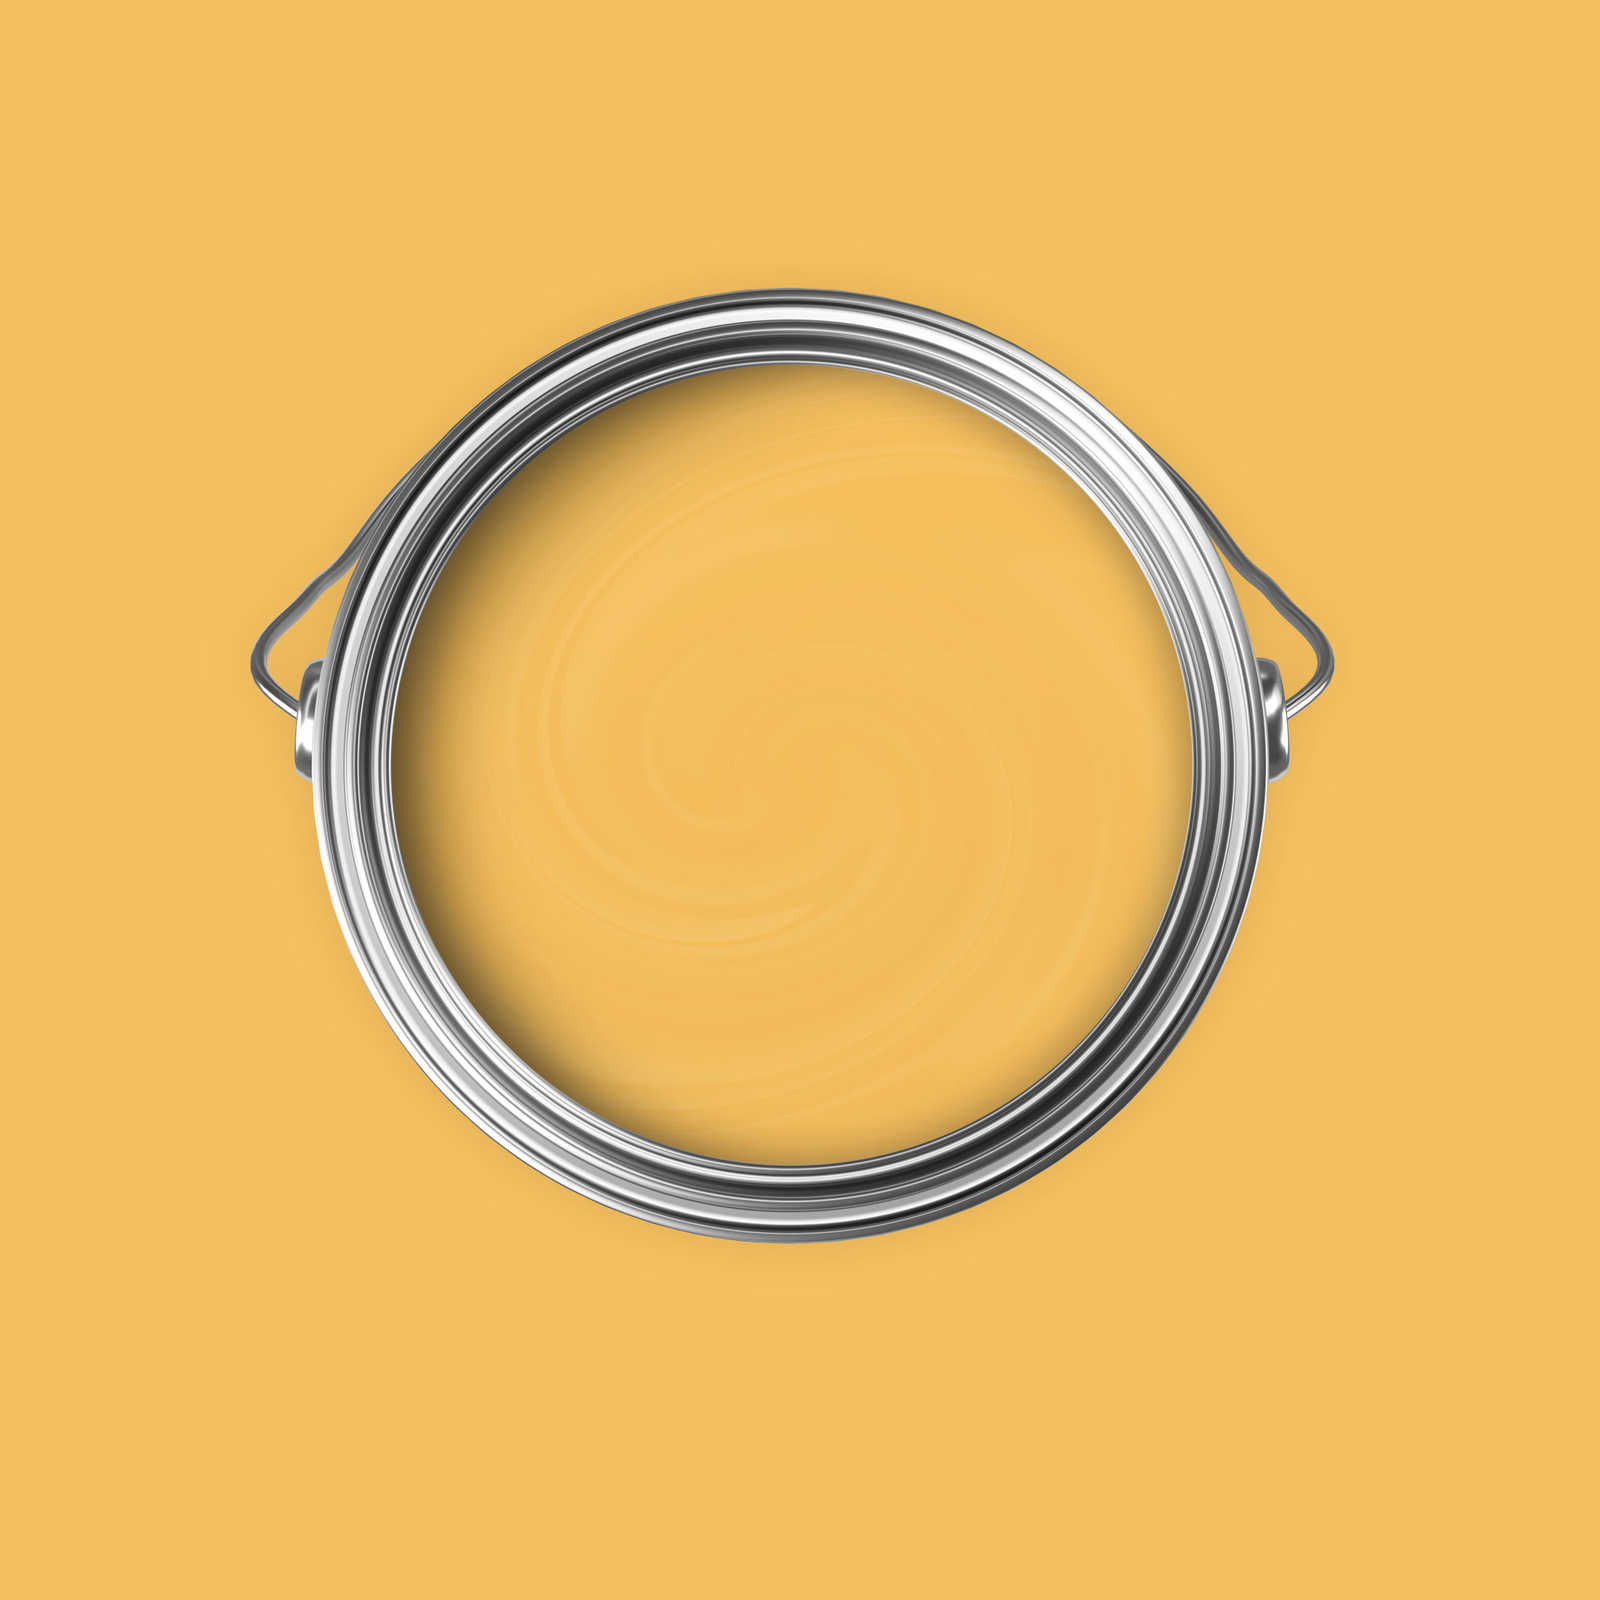             Premium Wall Paint Stimulating Sun Yellow »Juicy Yellow« NW805 – 5 litre
        